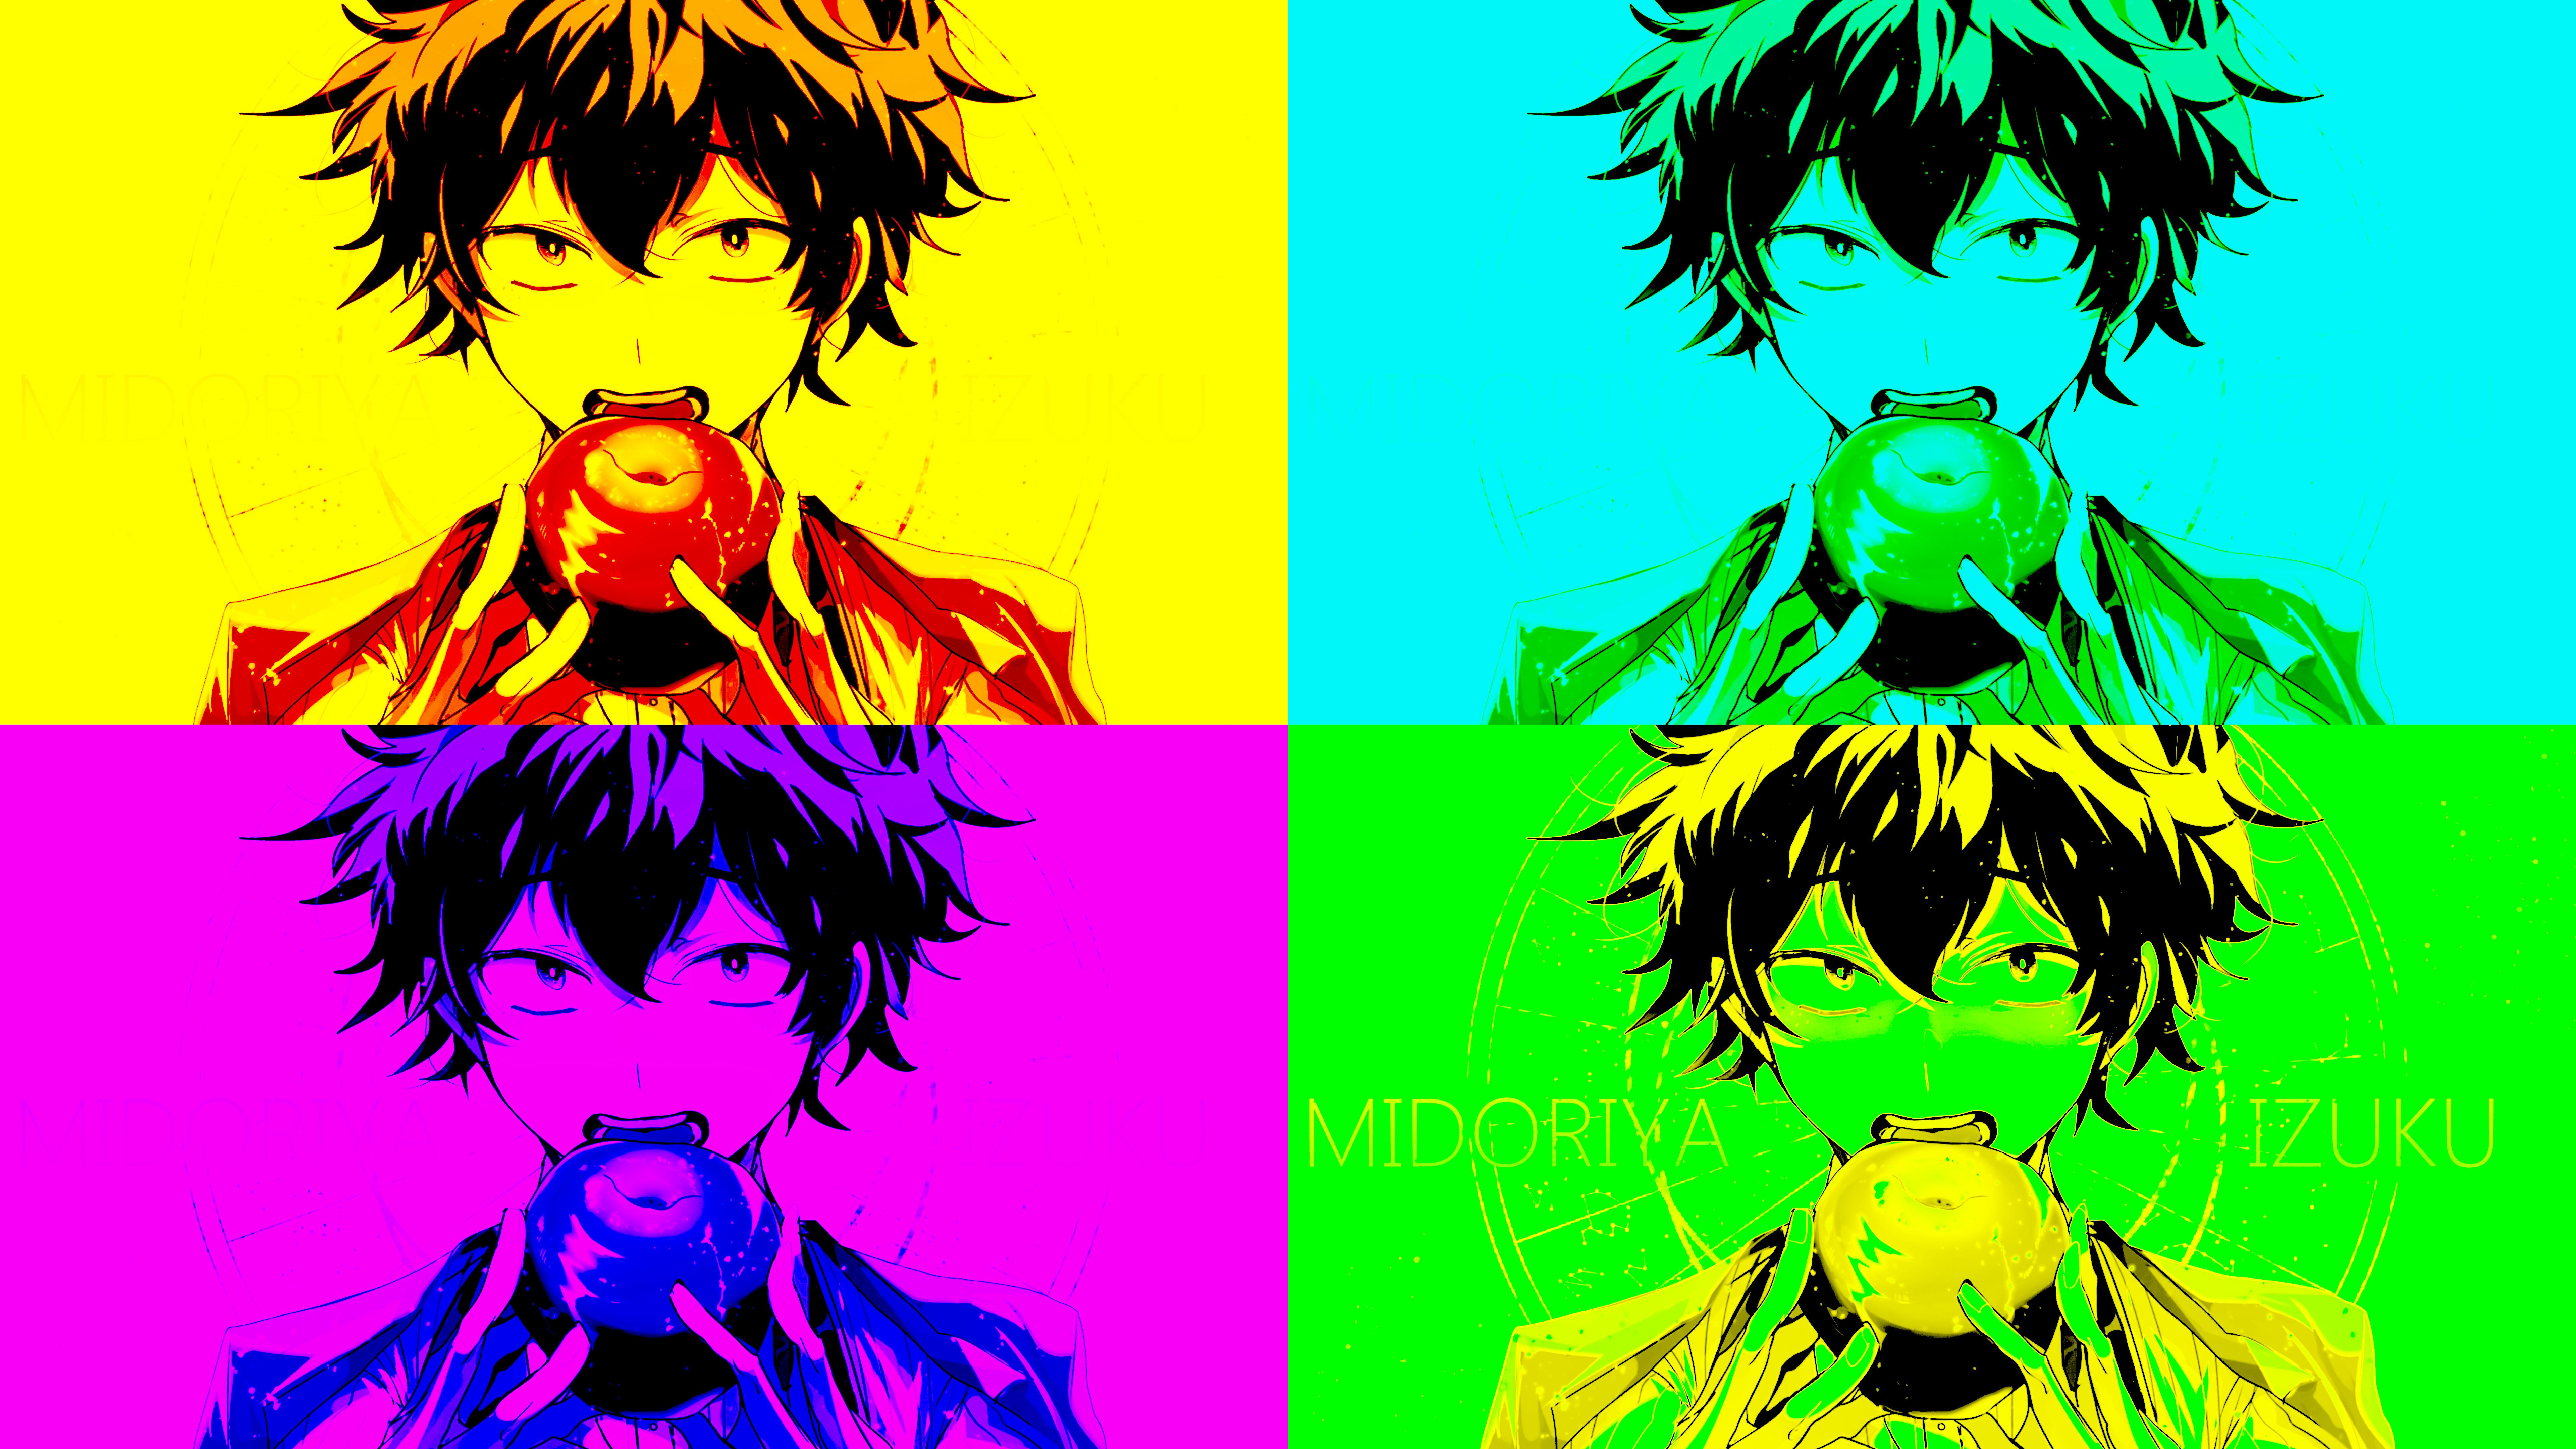 Izuku Midoriya My Hero Academia 67102 Pop Art Collage